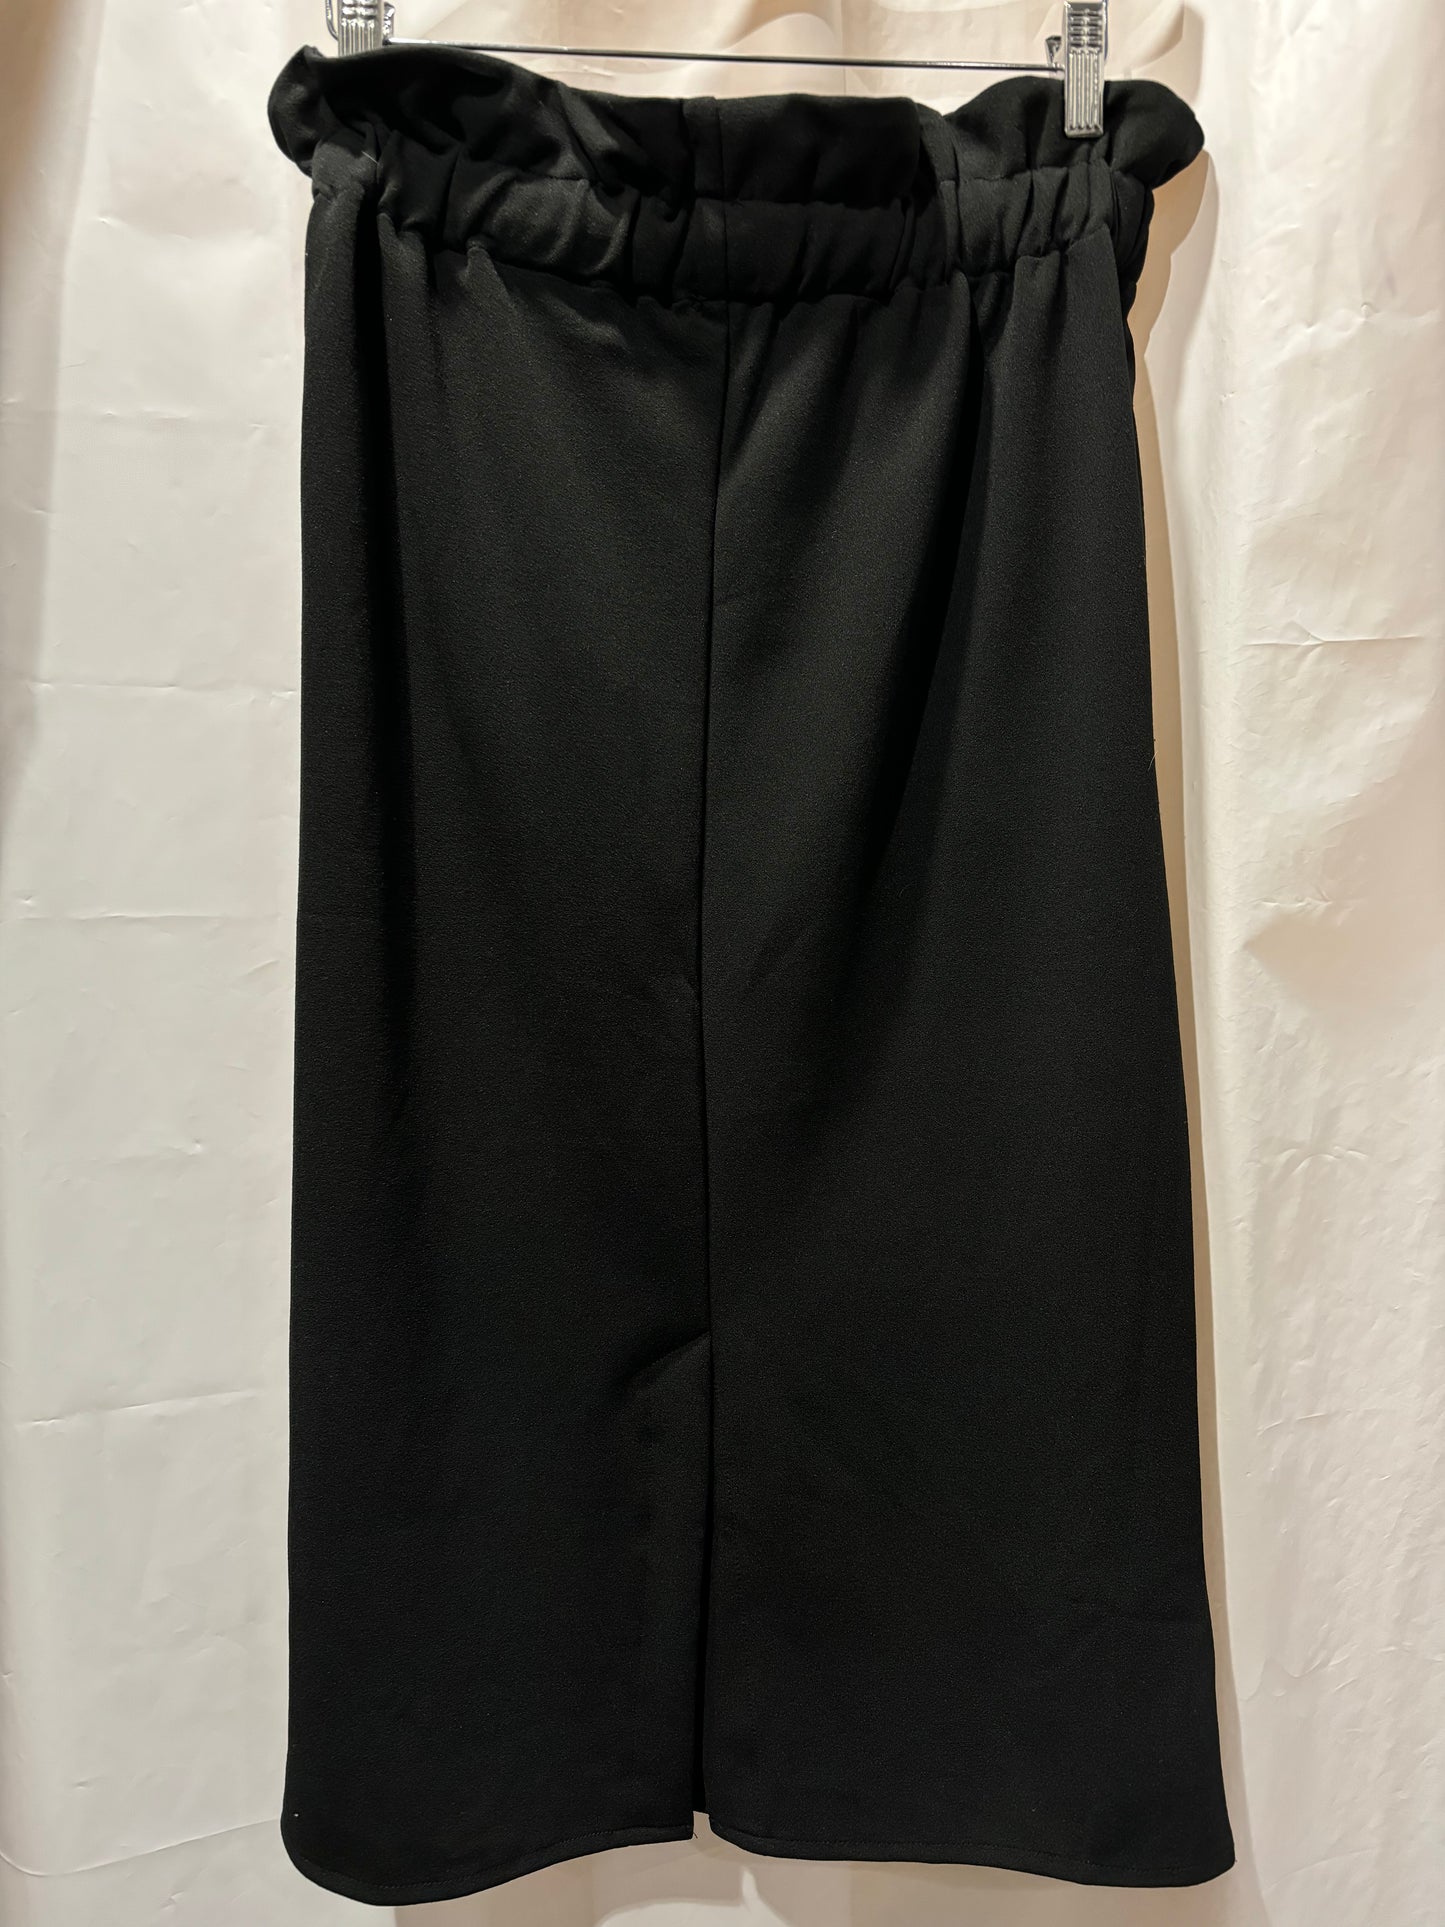 Long Skirt With Adjustable Waist